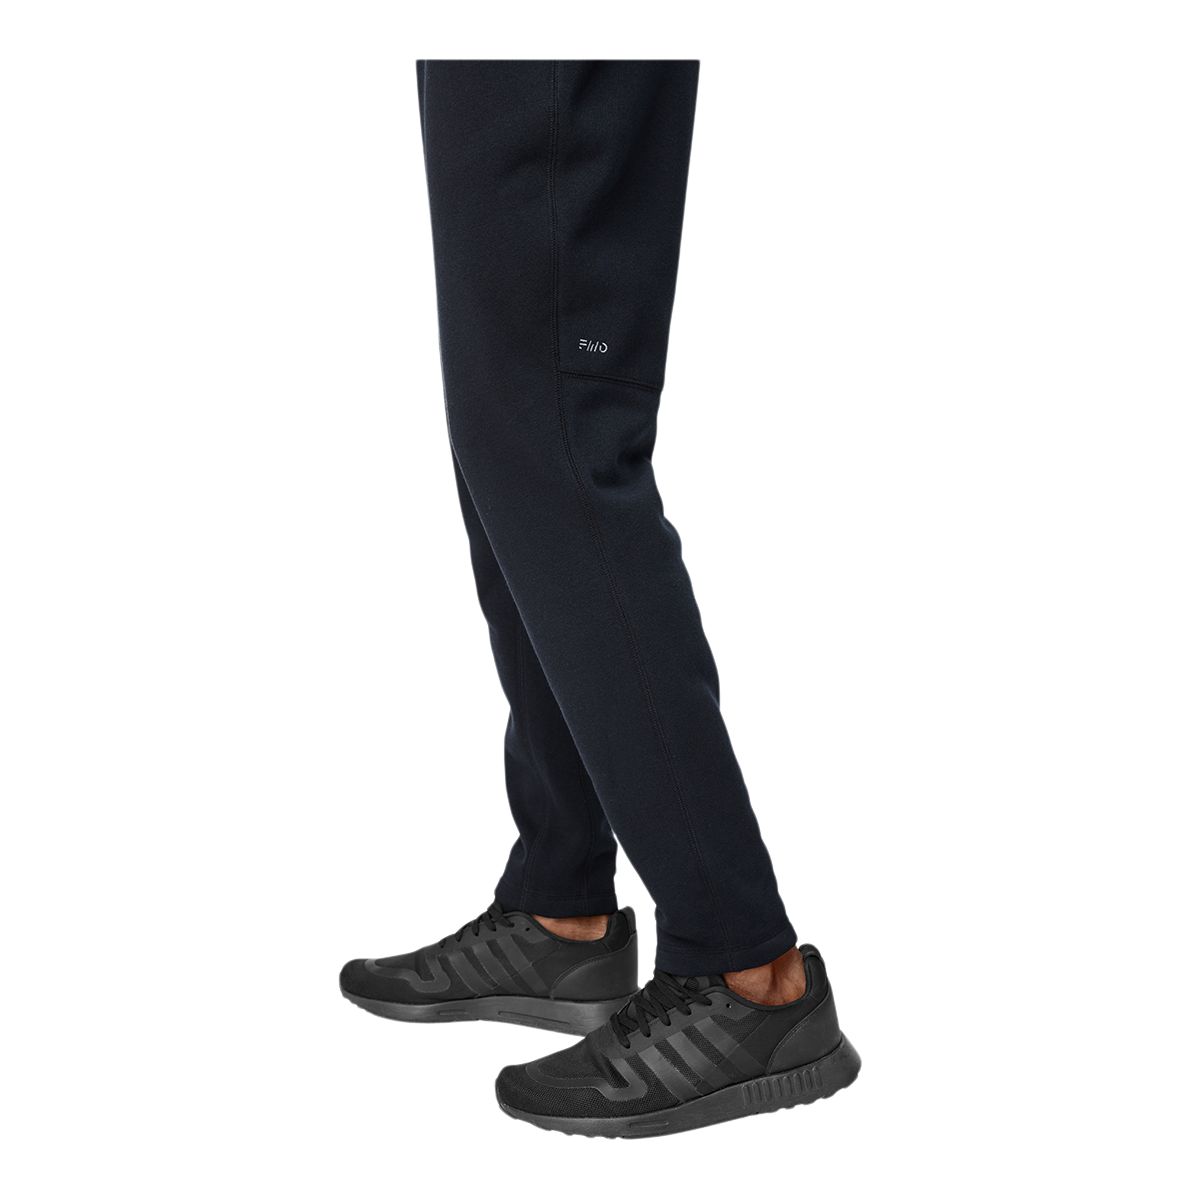 Bebe Sport Black Track Pants Size S - 63% off